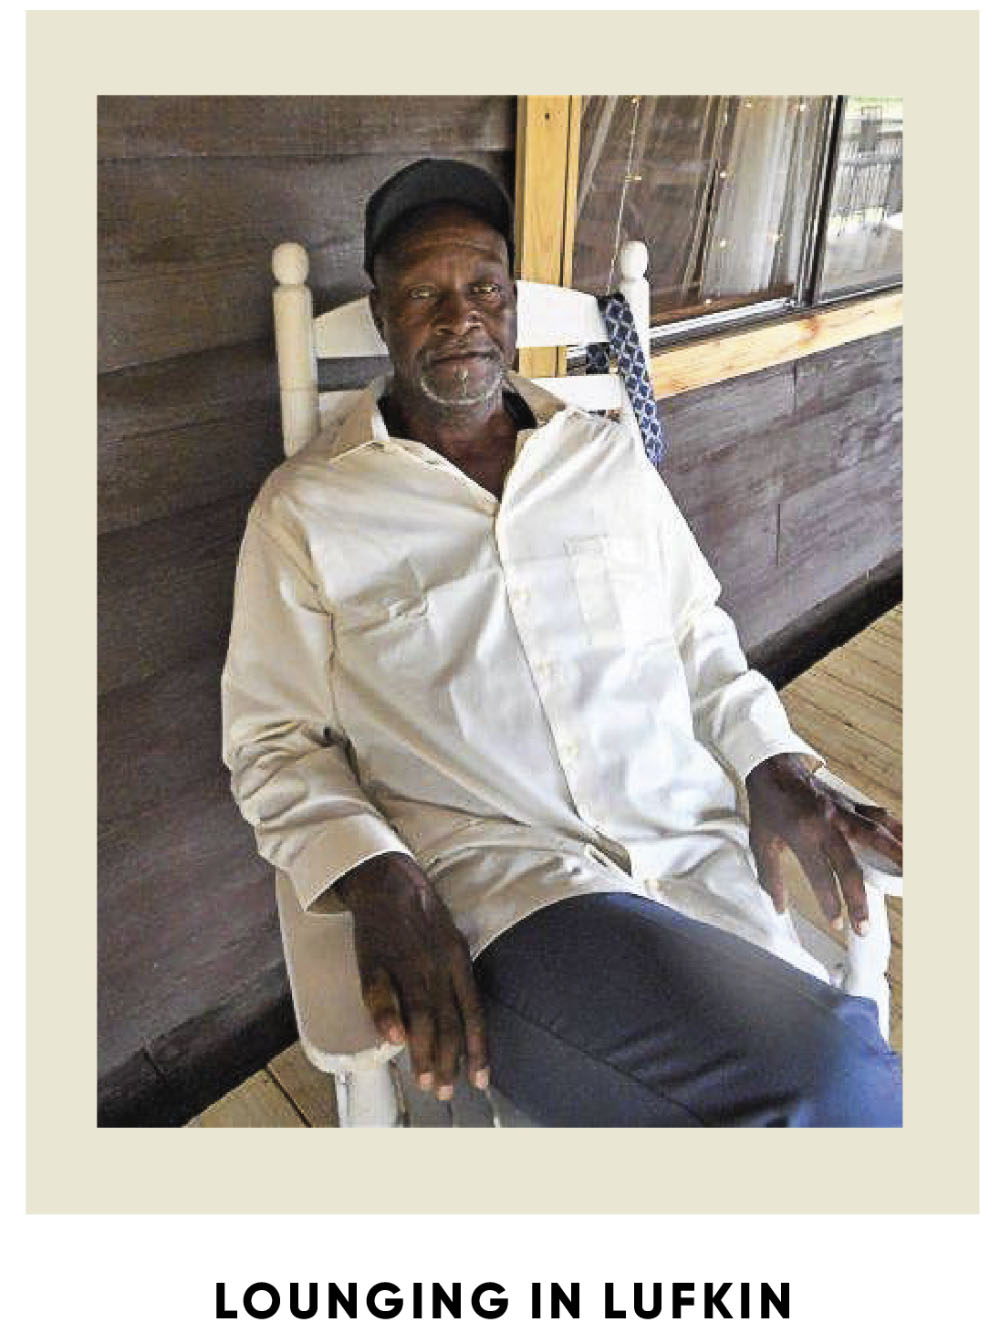 A man sits in a chair in Lufkin Texas